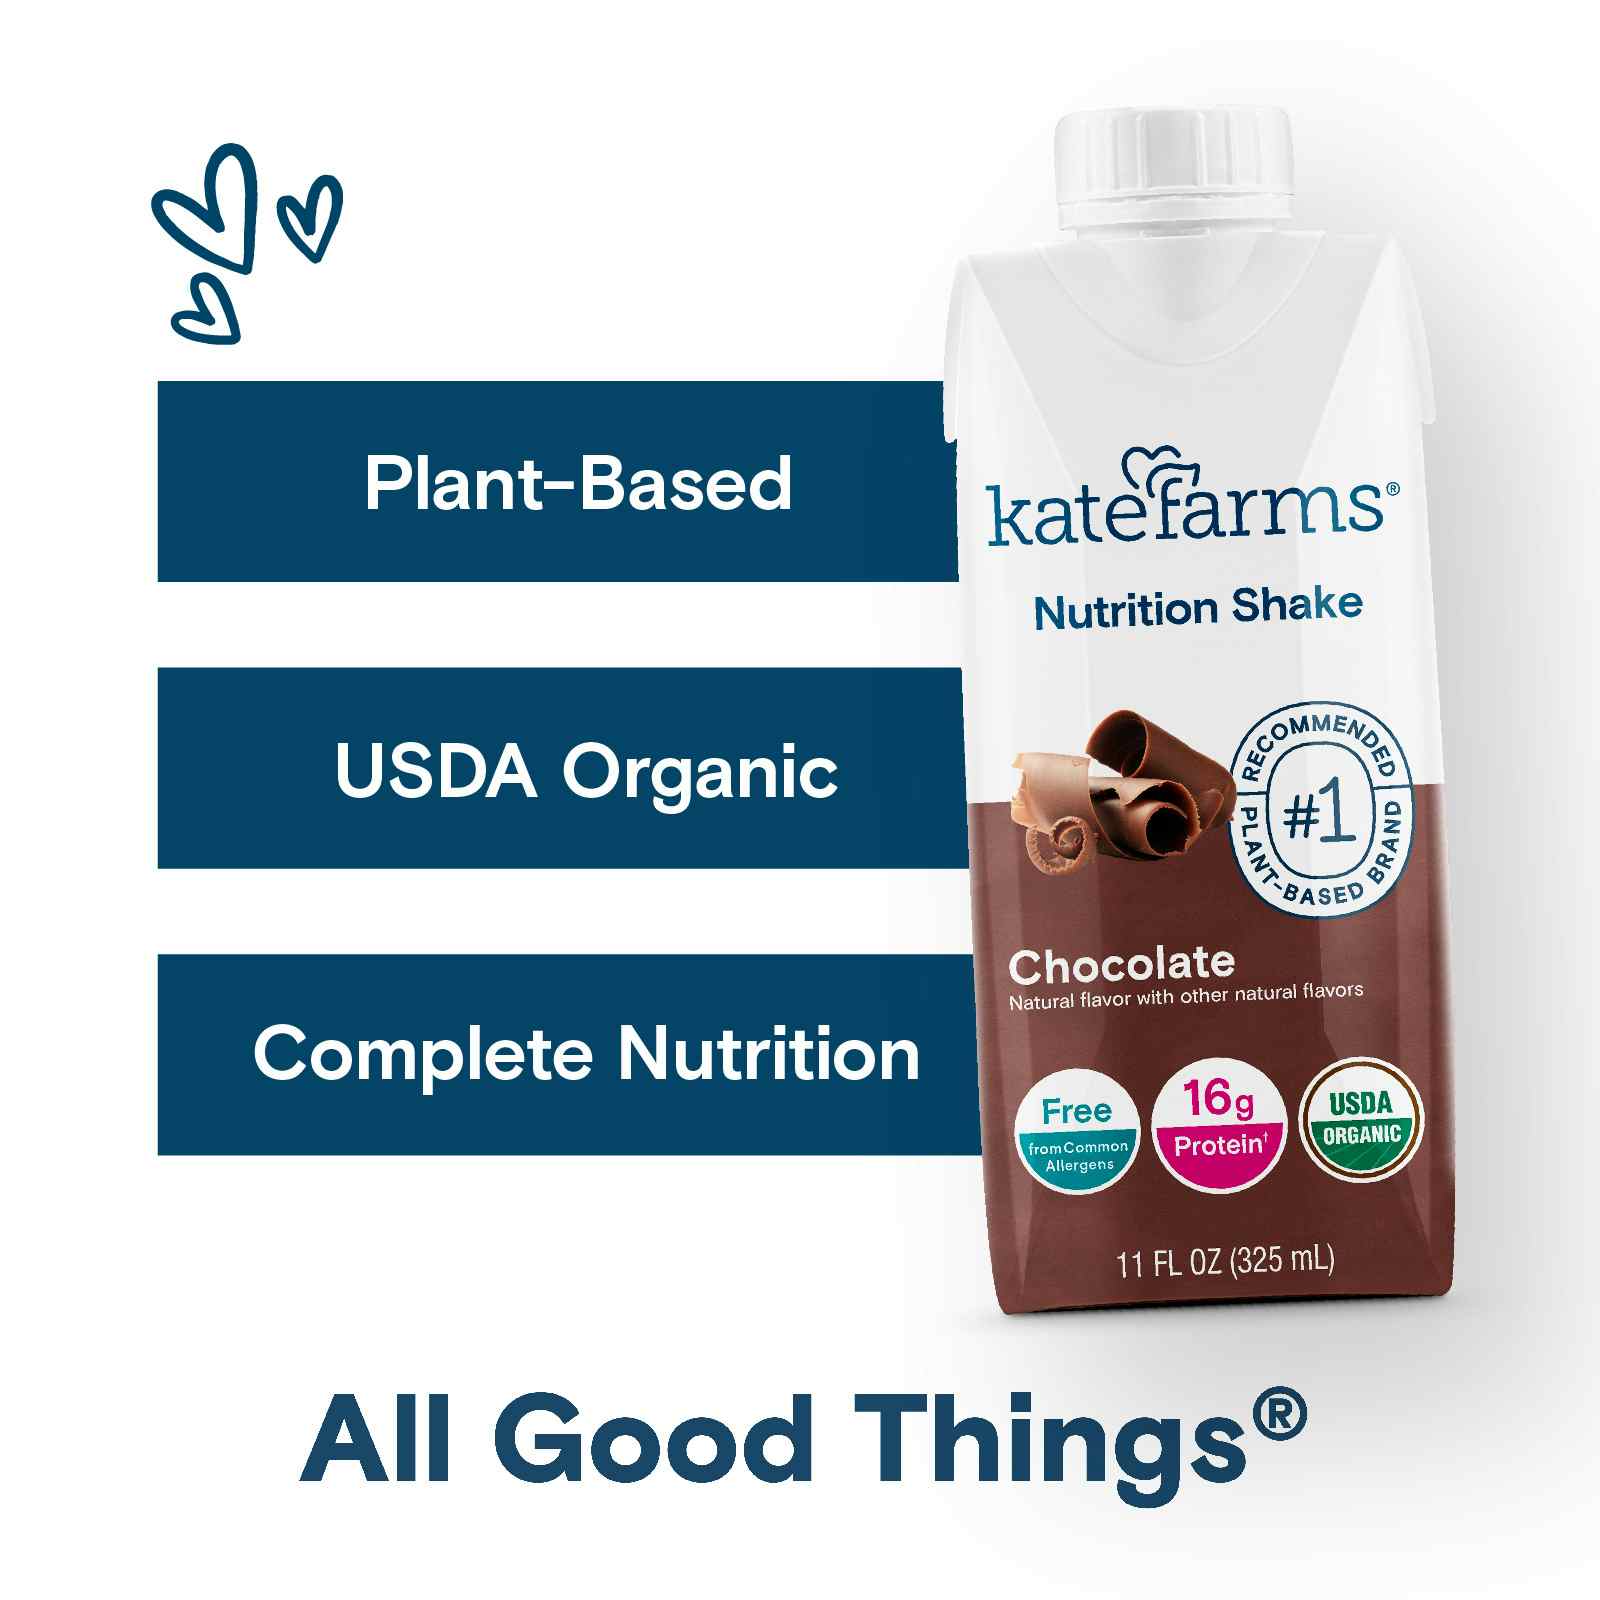 Kate Farms Nutrition Shake